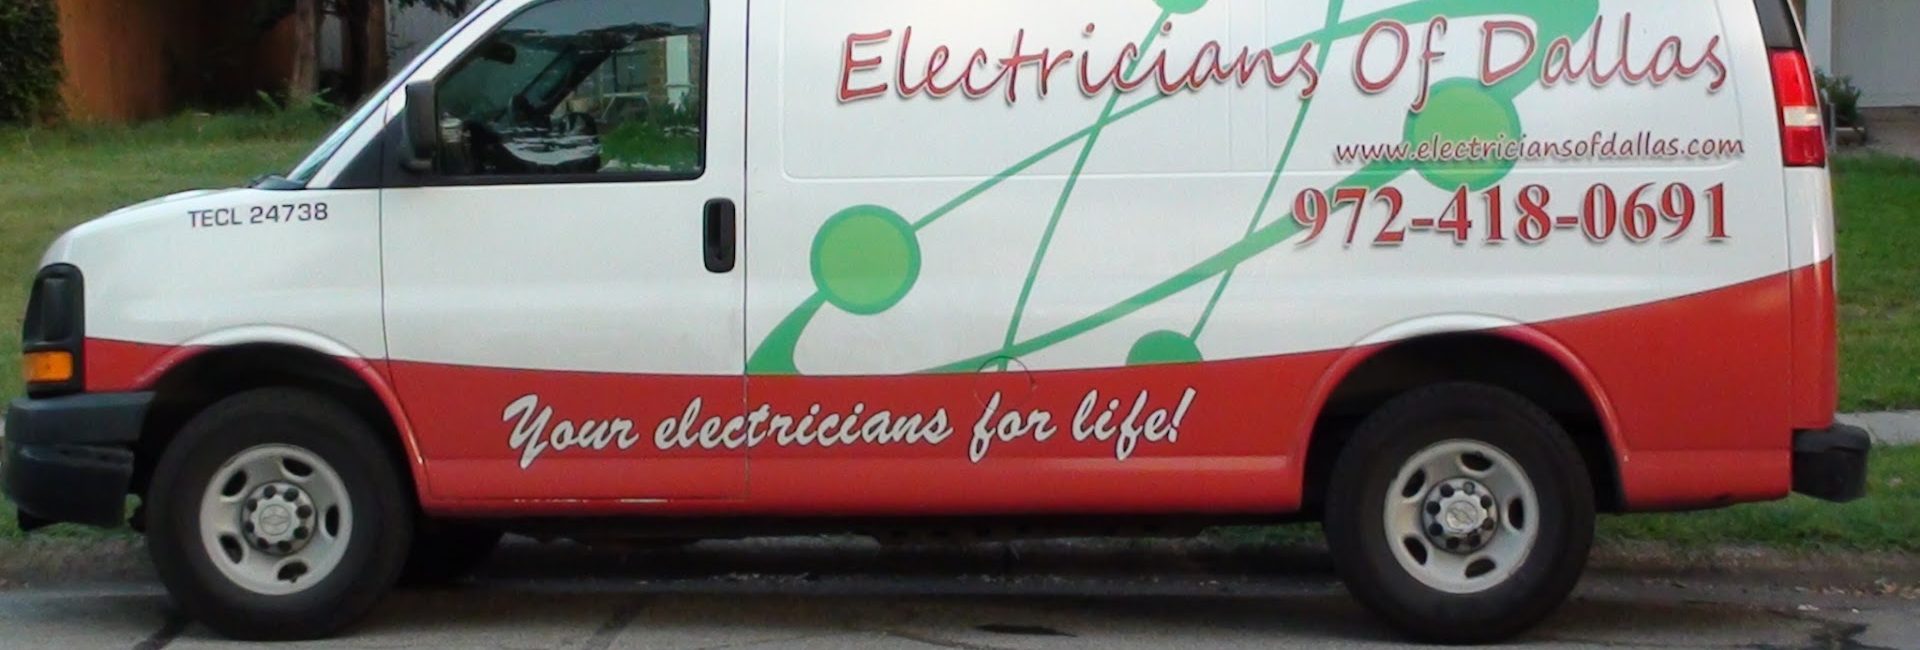 Electricians of Dallas, LLC 6